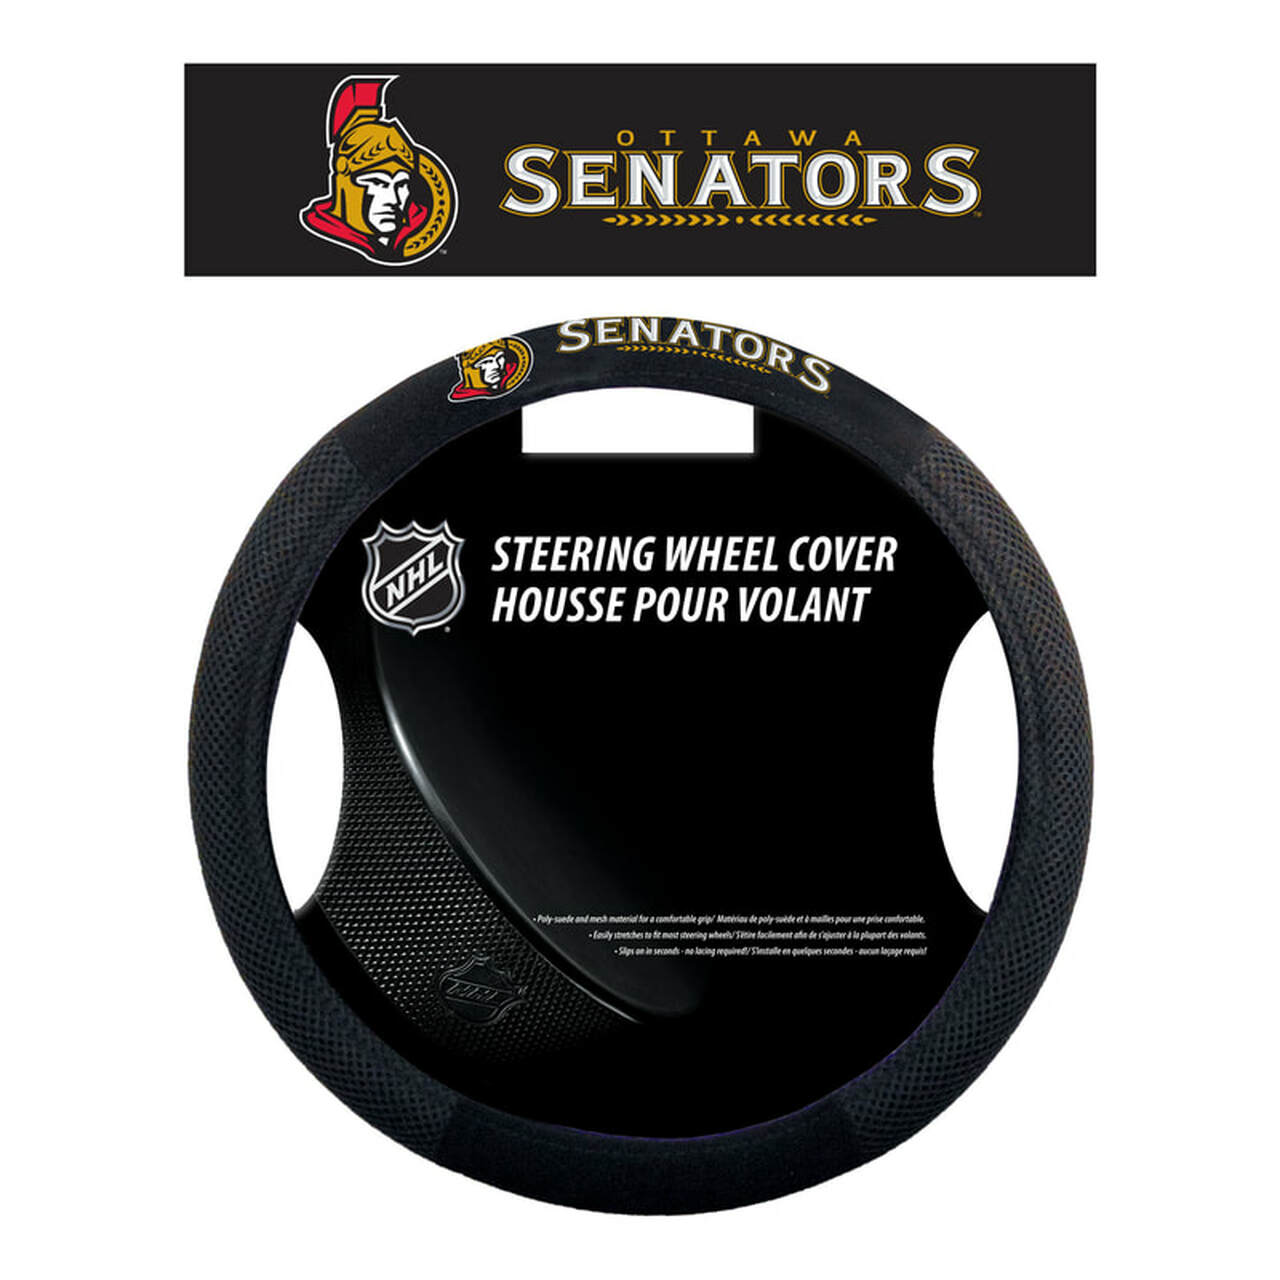 Ottawa Senators Mesh Steering Wheel Cover by Fremont Die